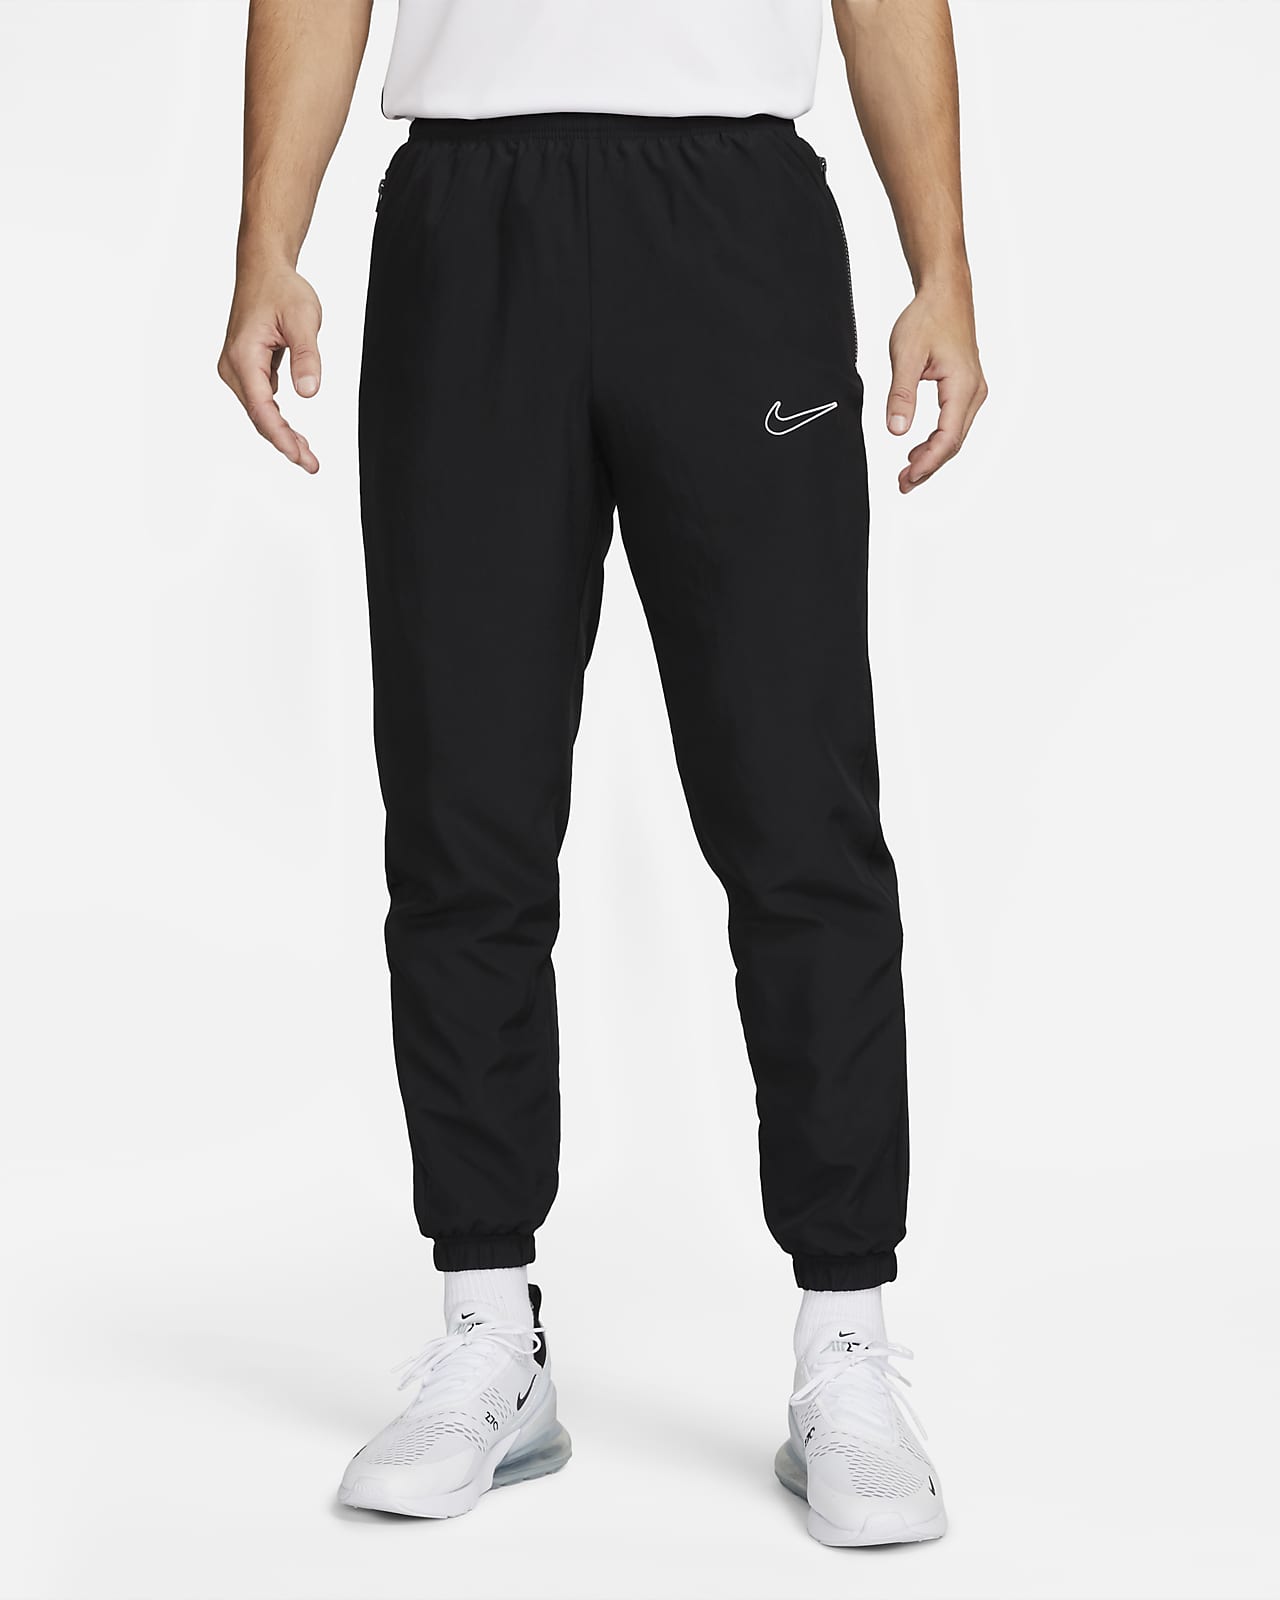 Nike Dri Fit Academy Pant (Black/White) - Soccer Wearhouse